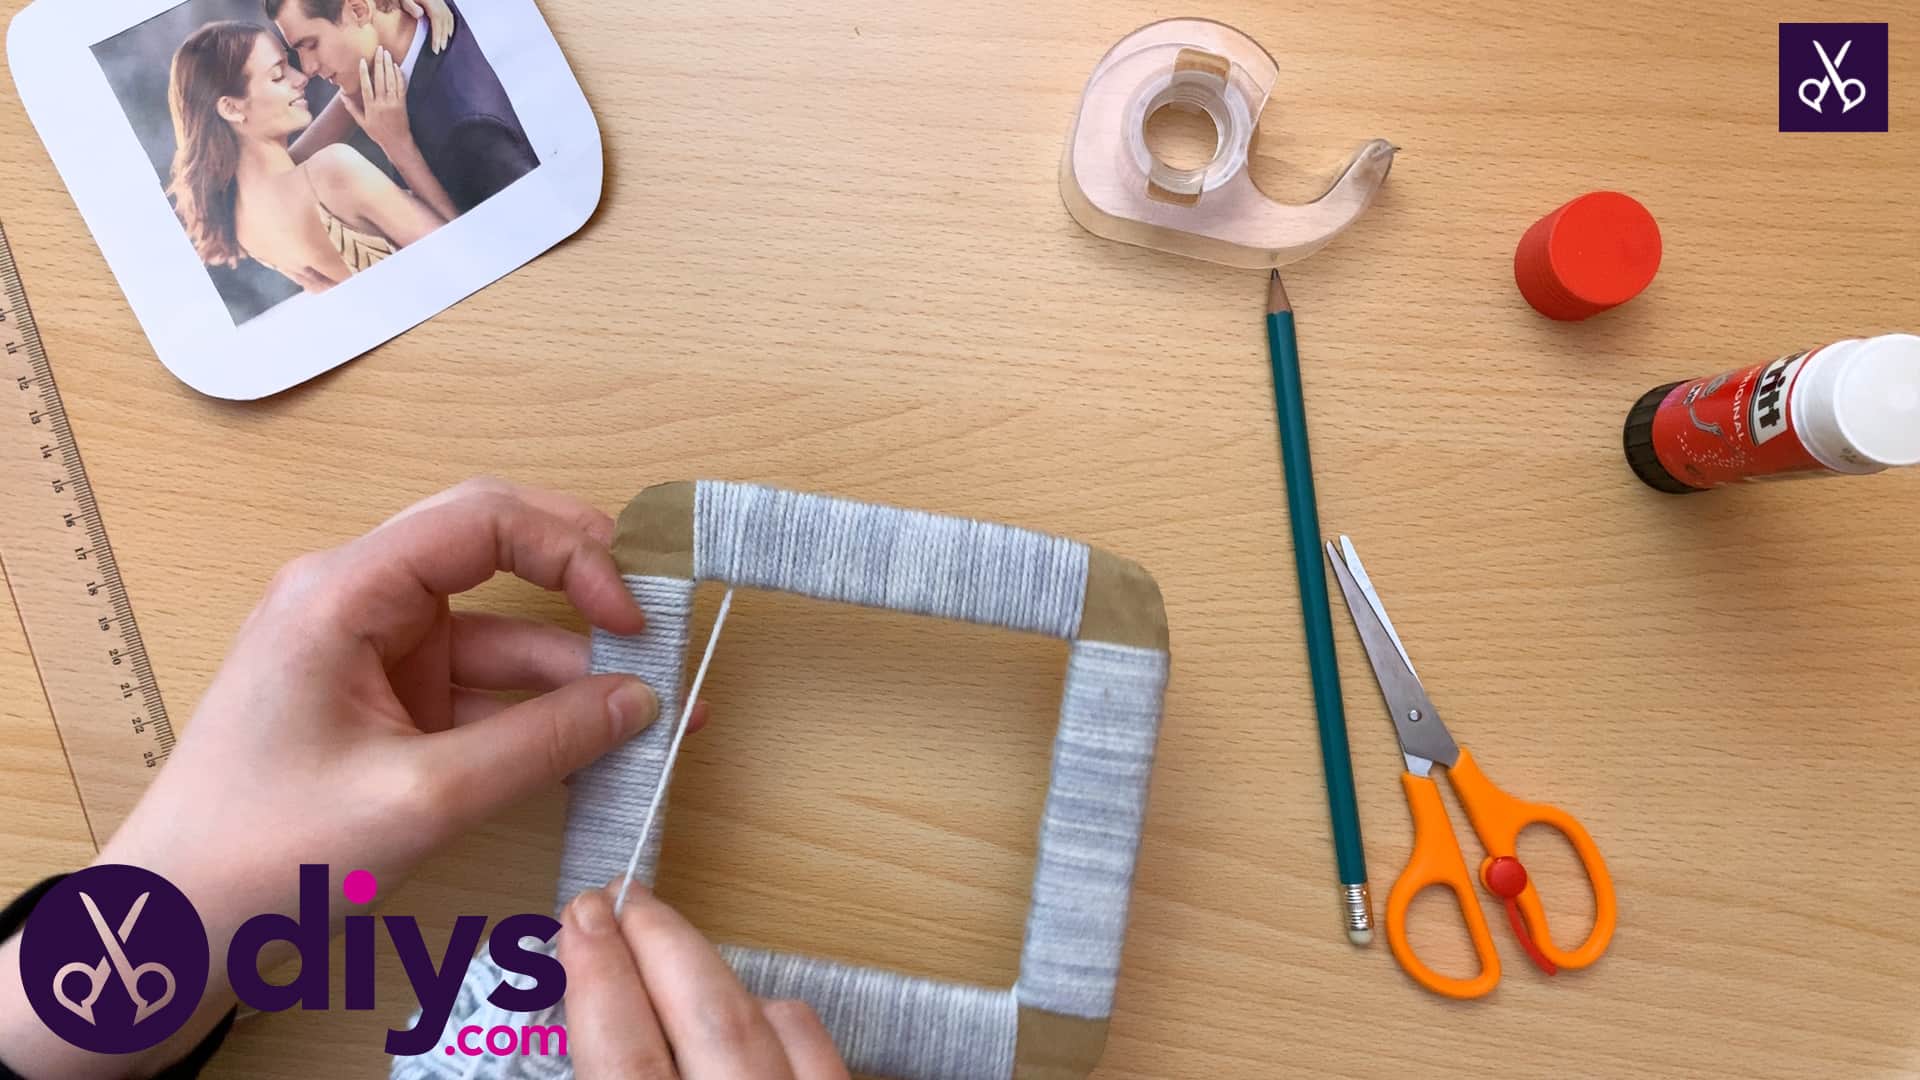 How to make a cardboard photo frame with yarn